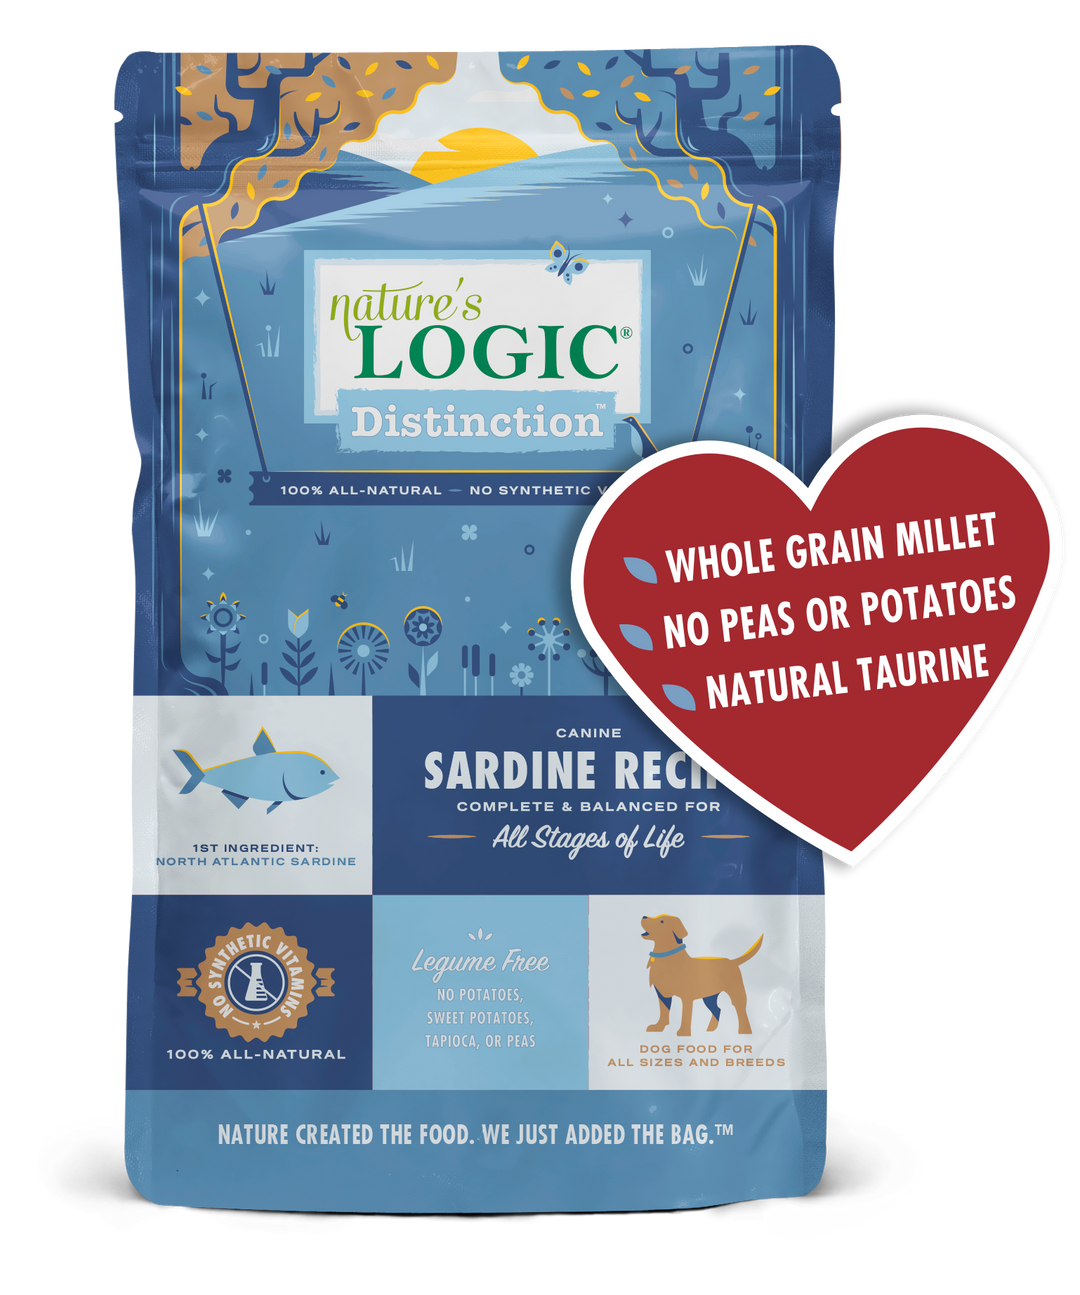 Nature's Logic Distinction Sardine for Dogs